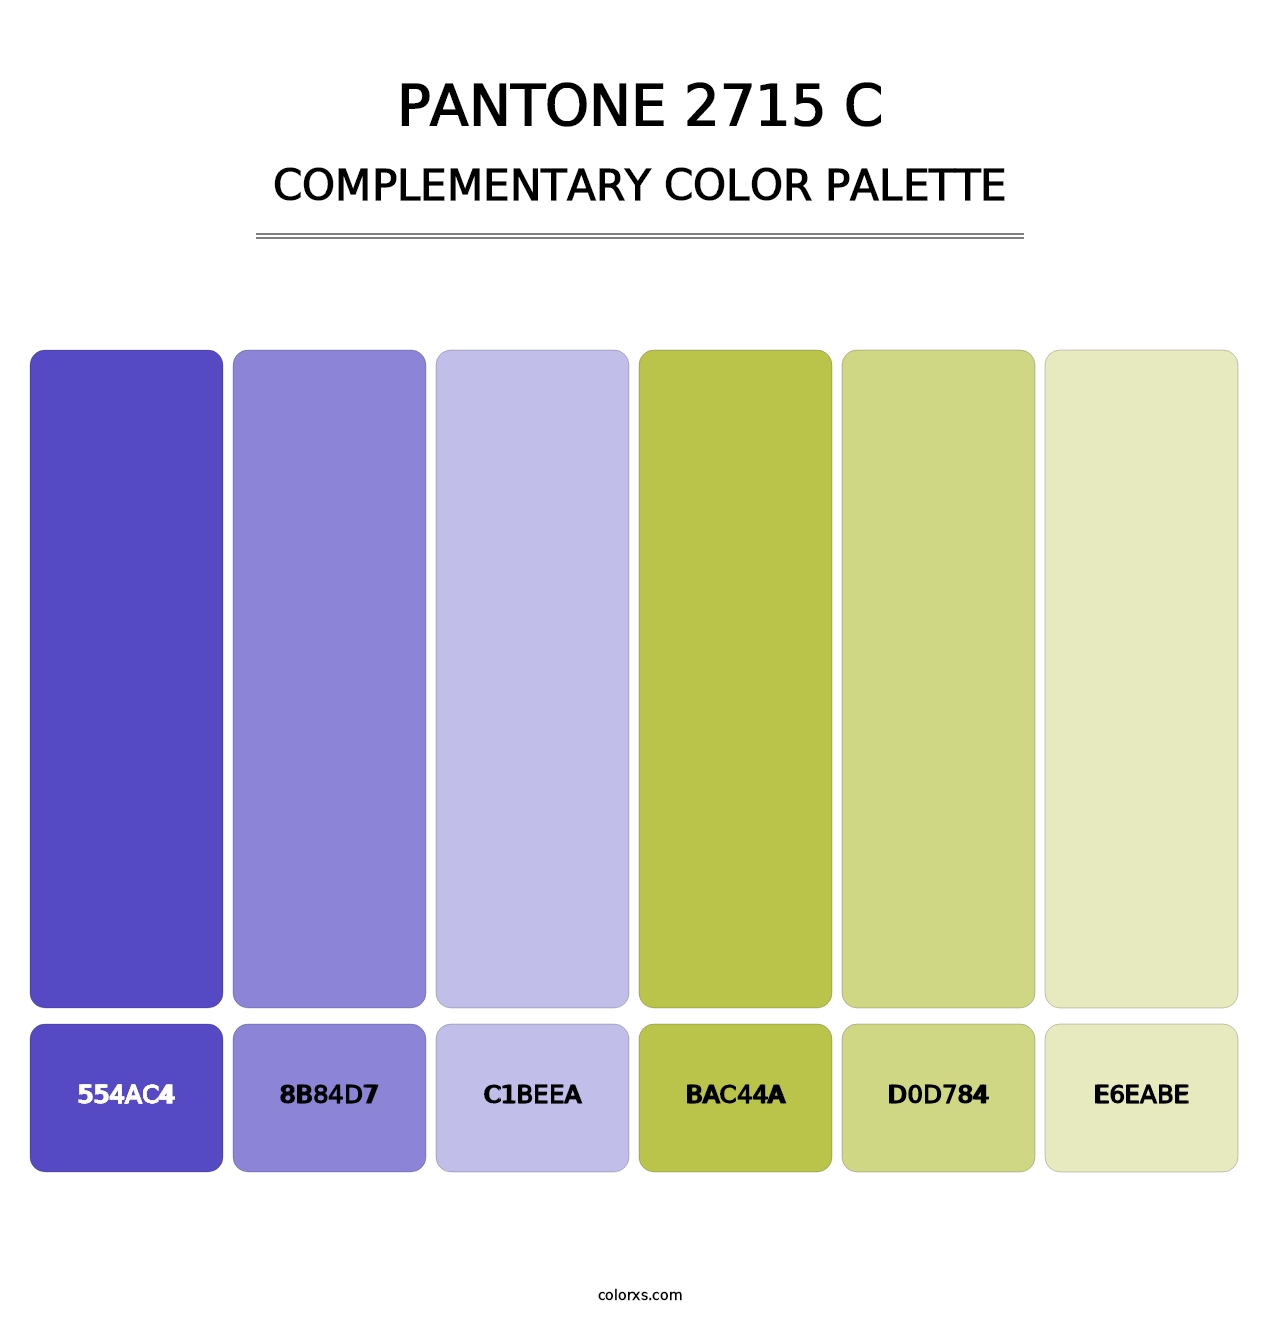 PANTONE 2715 C - Complementary Color Palette